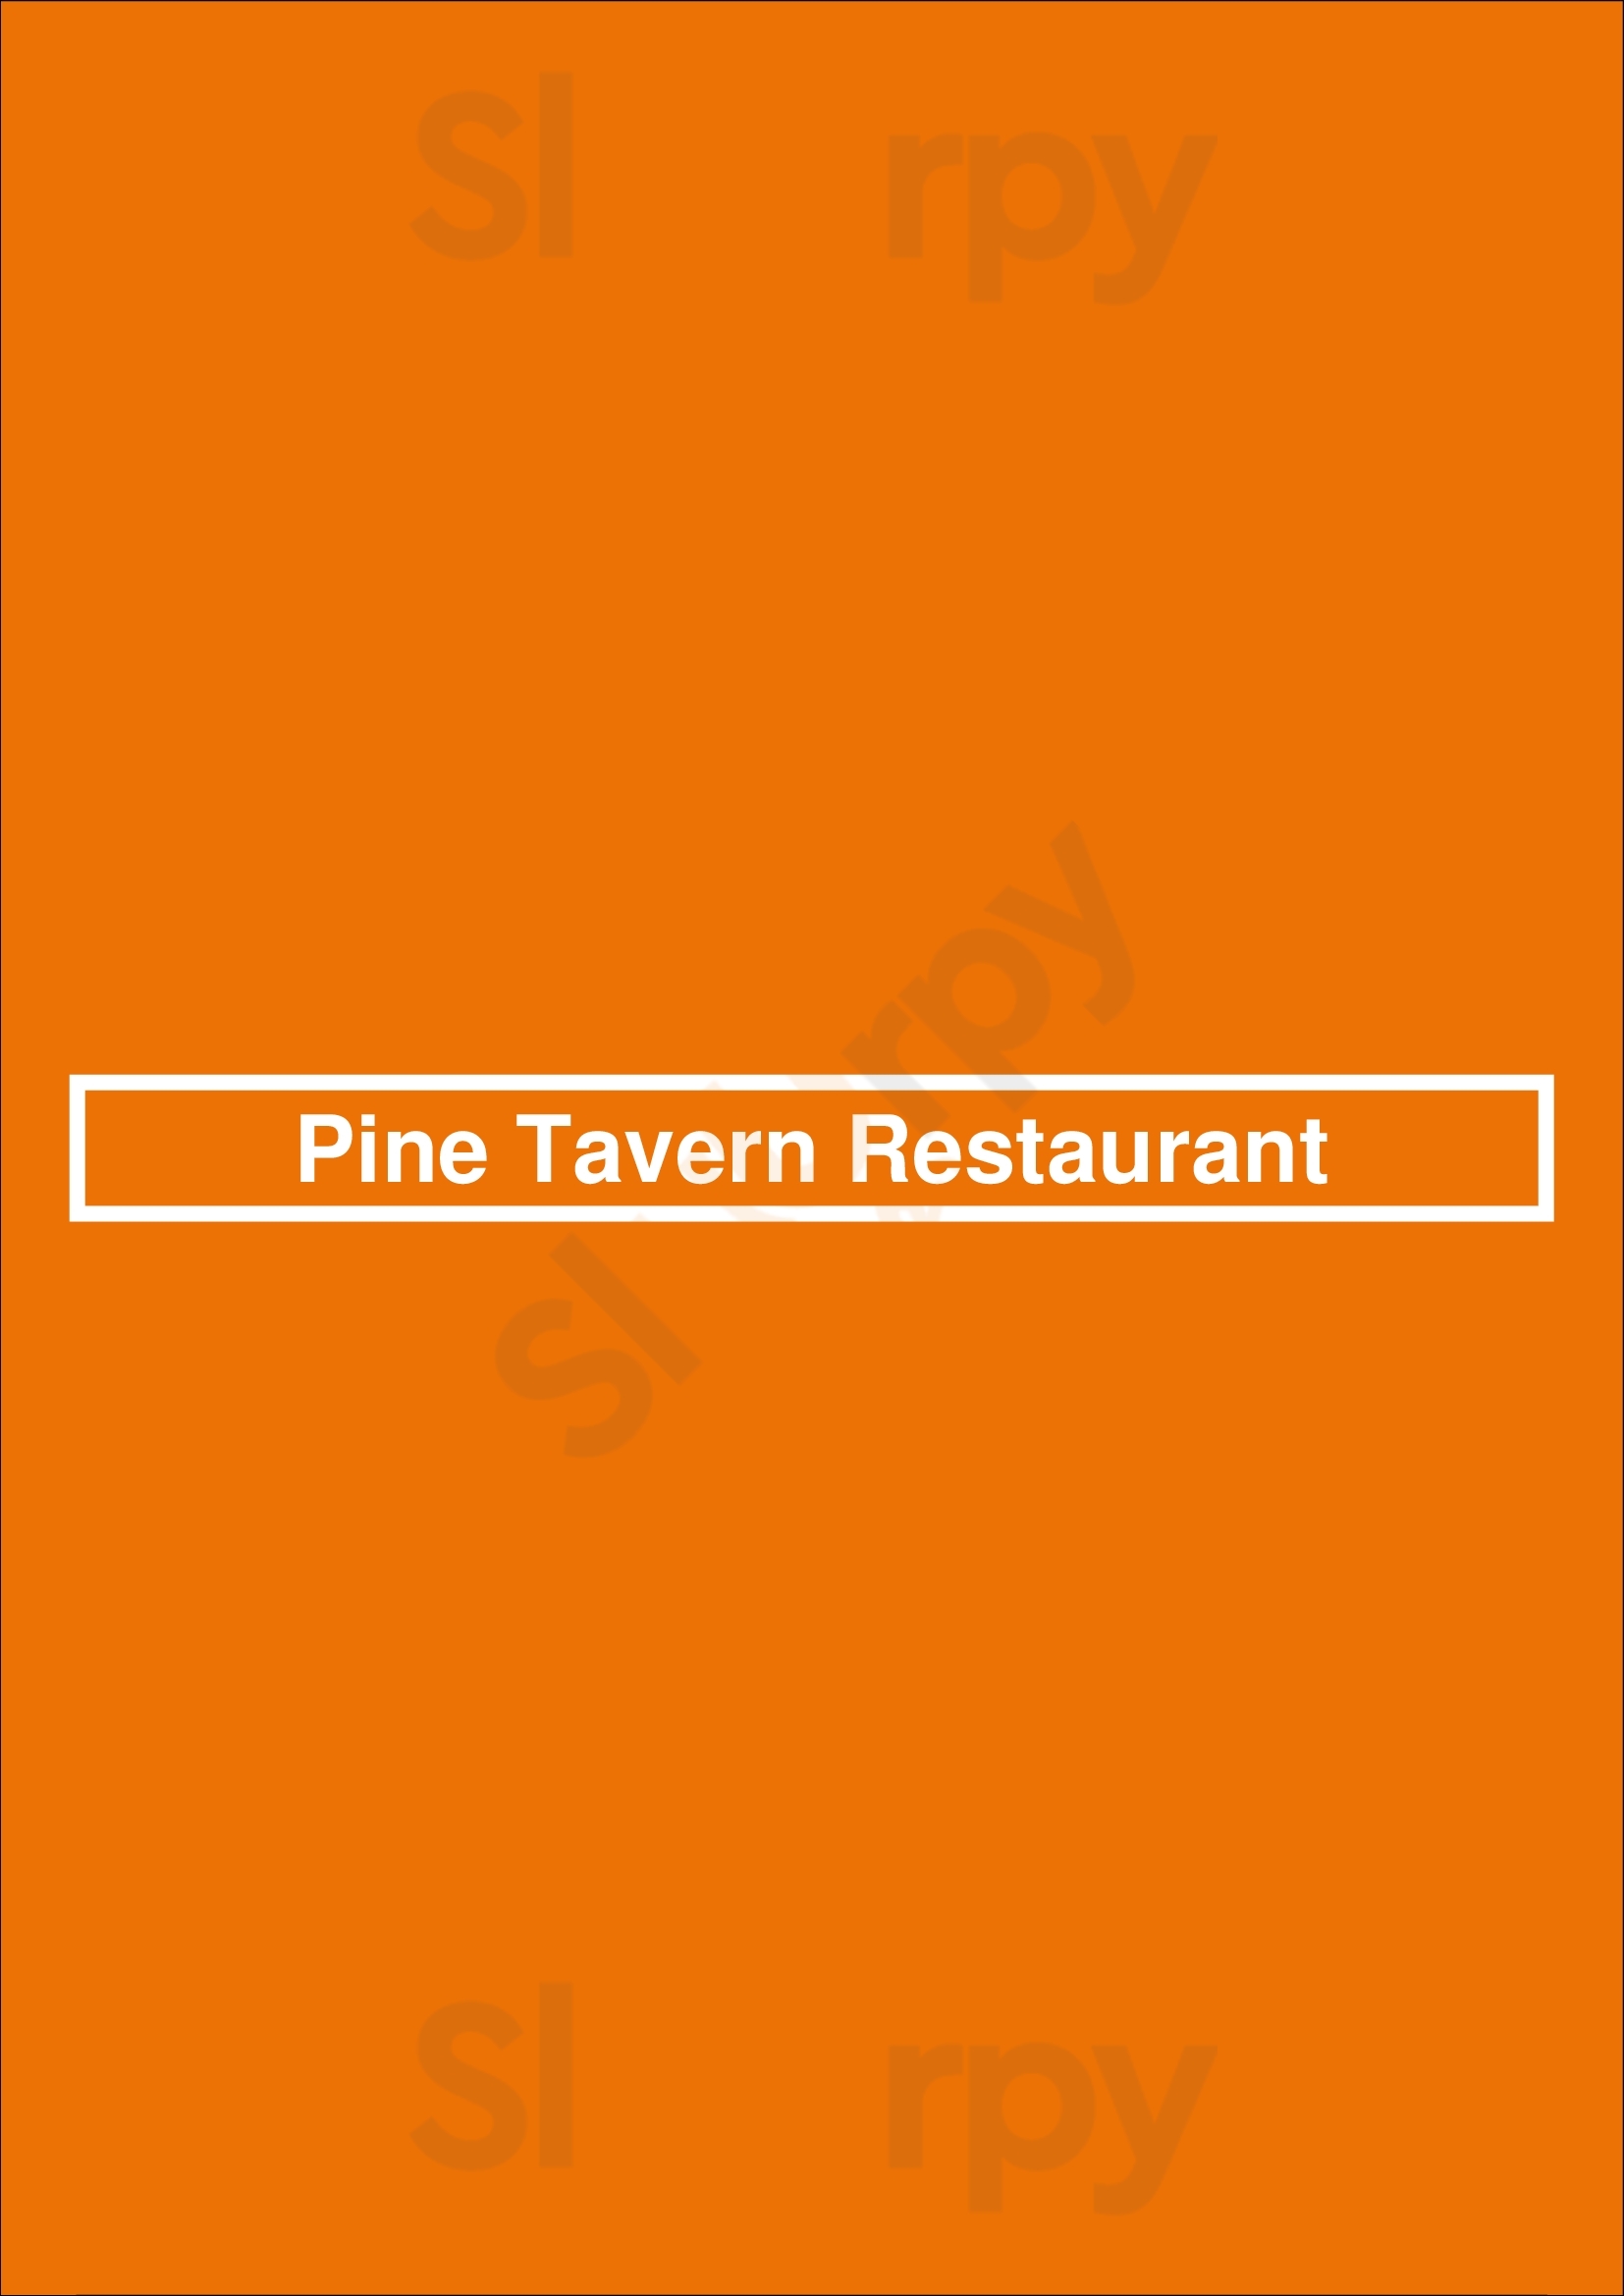 Pine Tavern Restaurant Bend Menu - 1